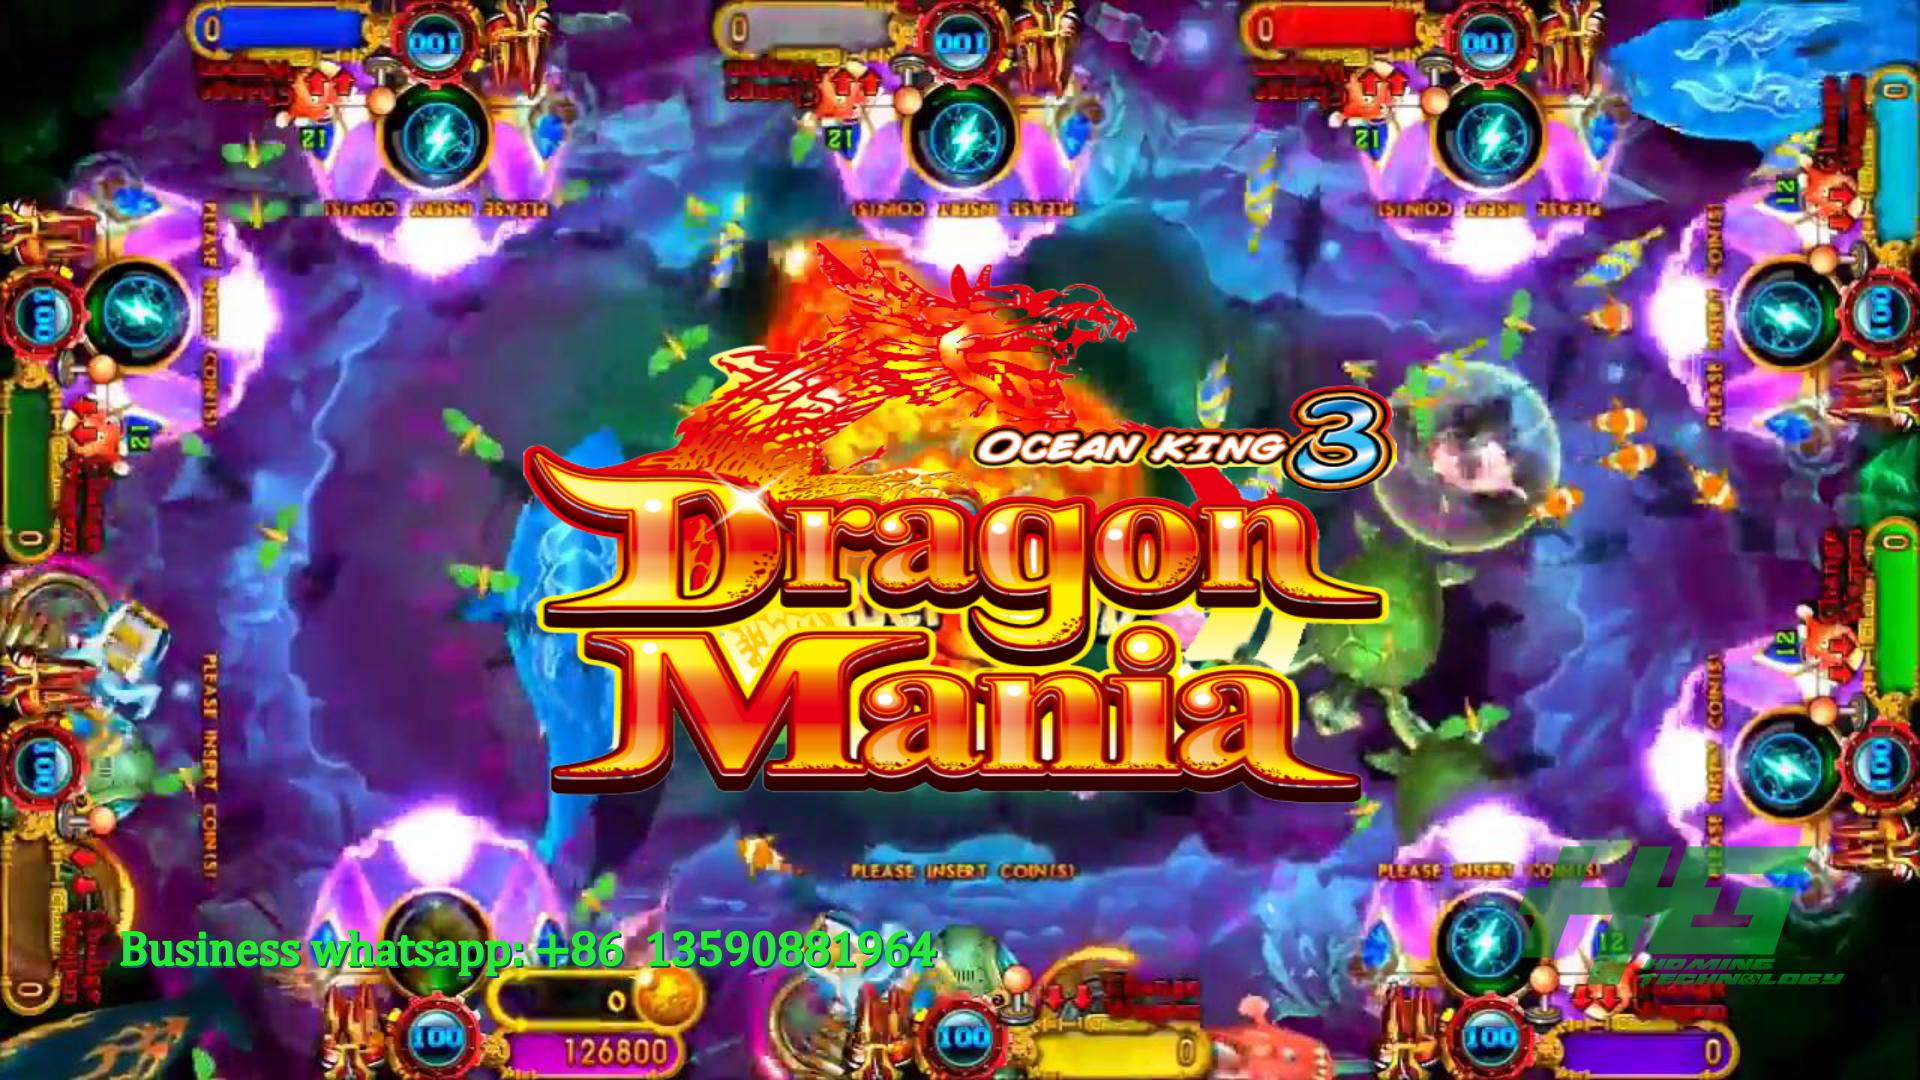 IGS Original Ocean King 3 Dragon Mania,Ocean King 3 Plus Fish Casino Game Machine For Sale 